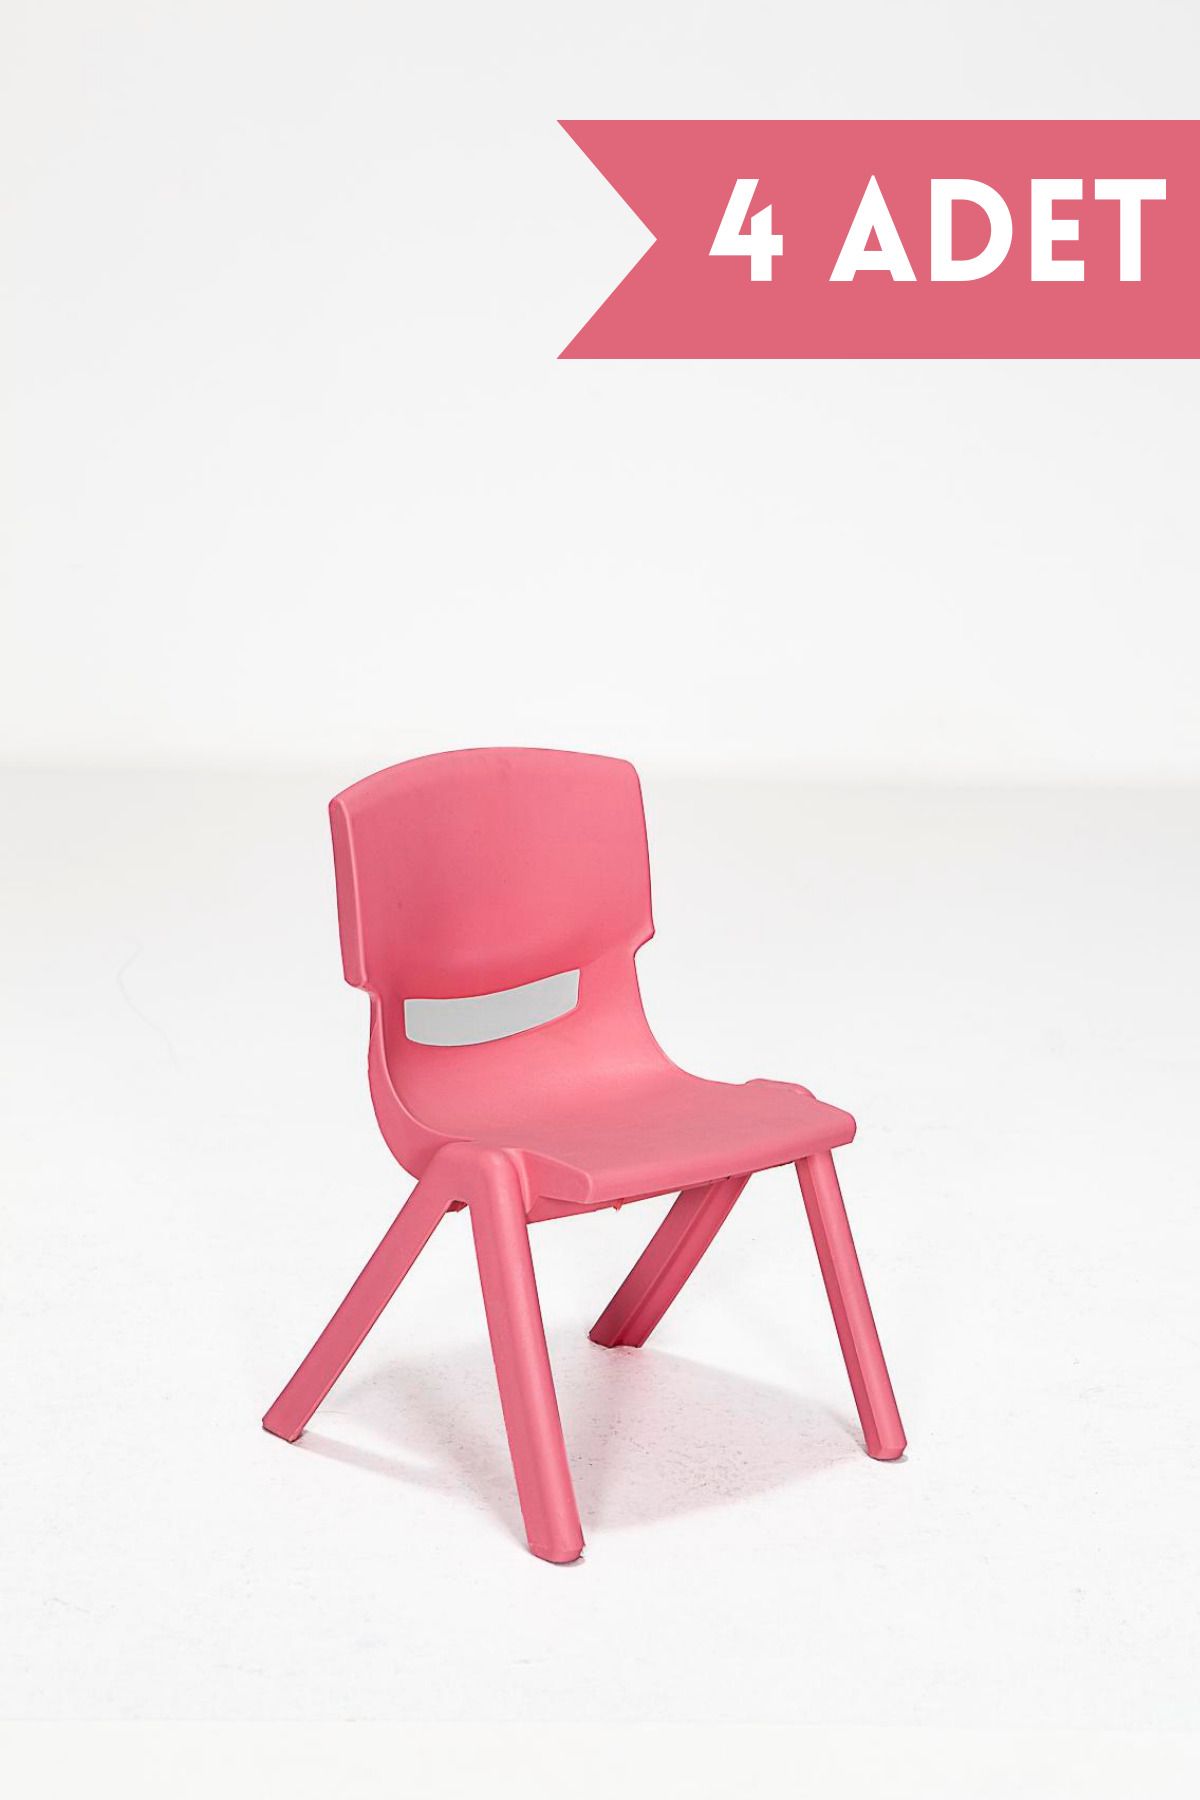 MOBETTO 4 Adet Kreş Anaokulu Çocuk Sandalyesi Sert Plastik- Pembe